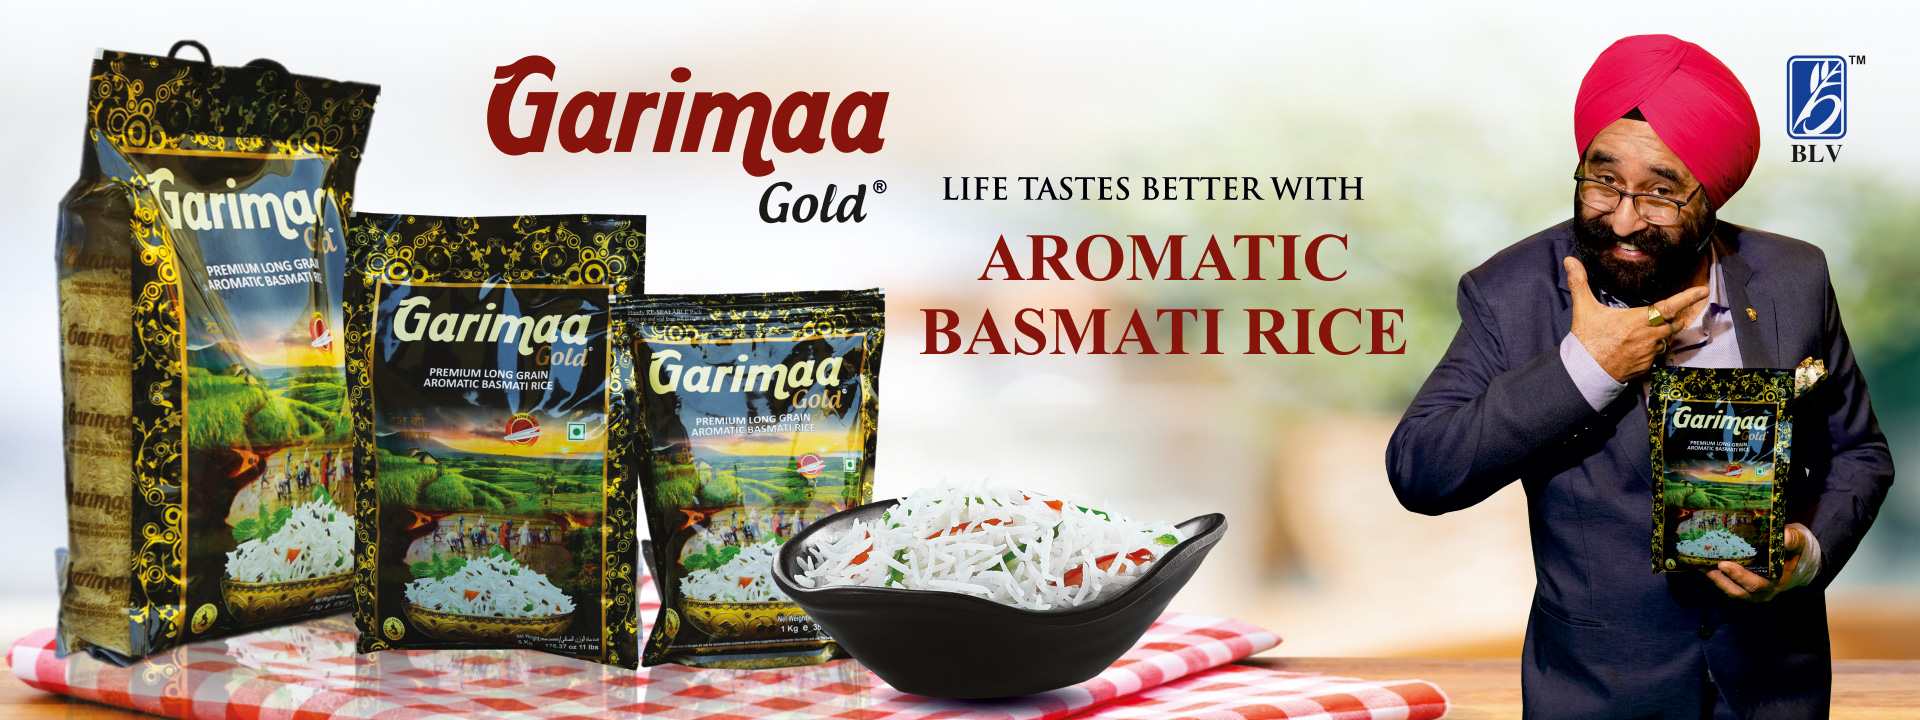 garimaa_gold_basmati_rice_manufacturers